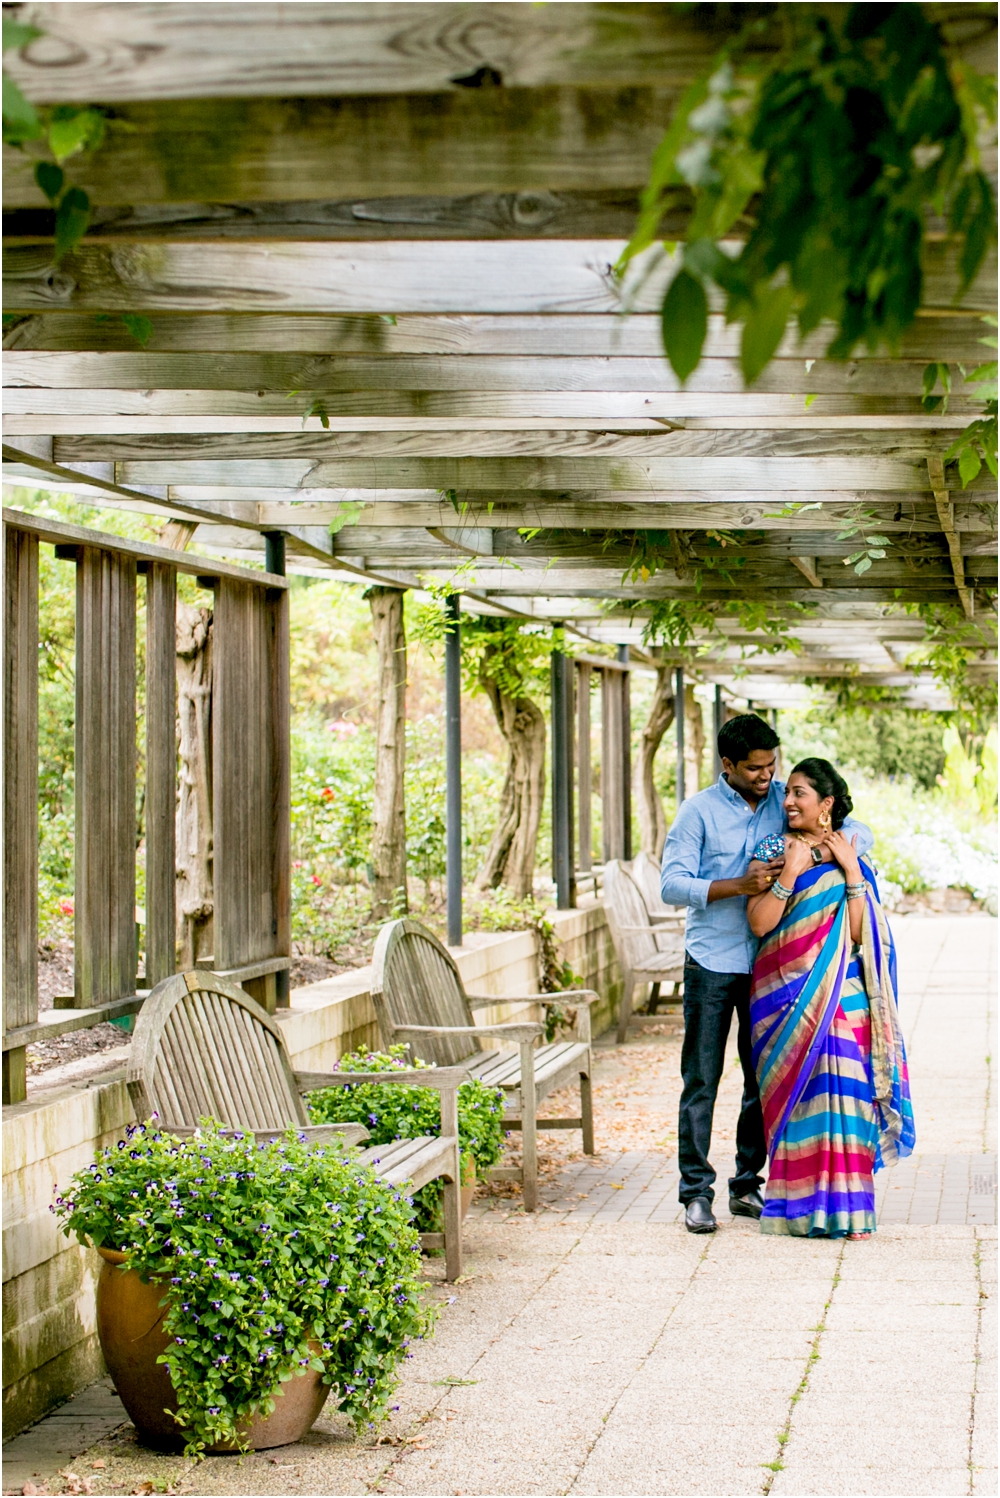 Living Radiant Photography | Engagements & Weddings at Brookside Gardens | Maryland Best Wedding Photographers 